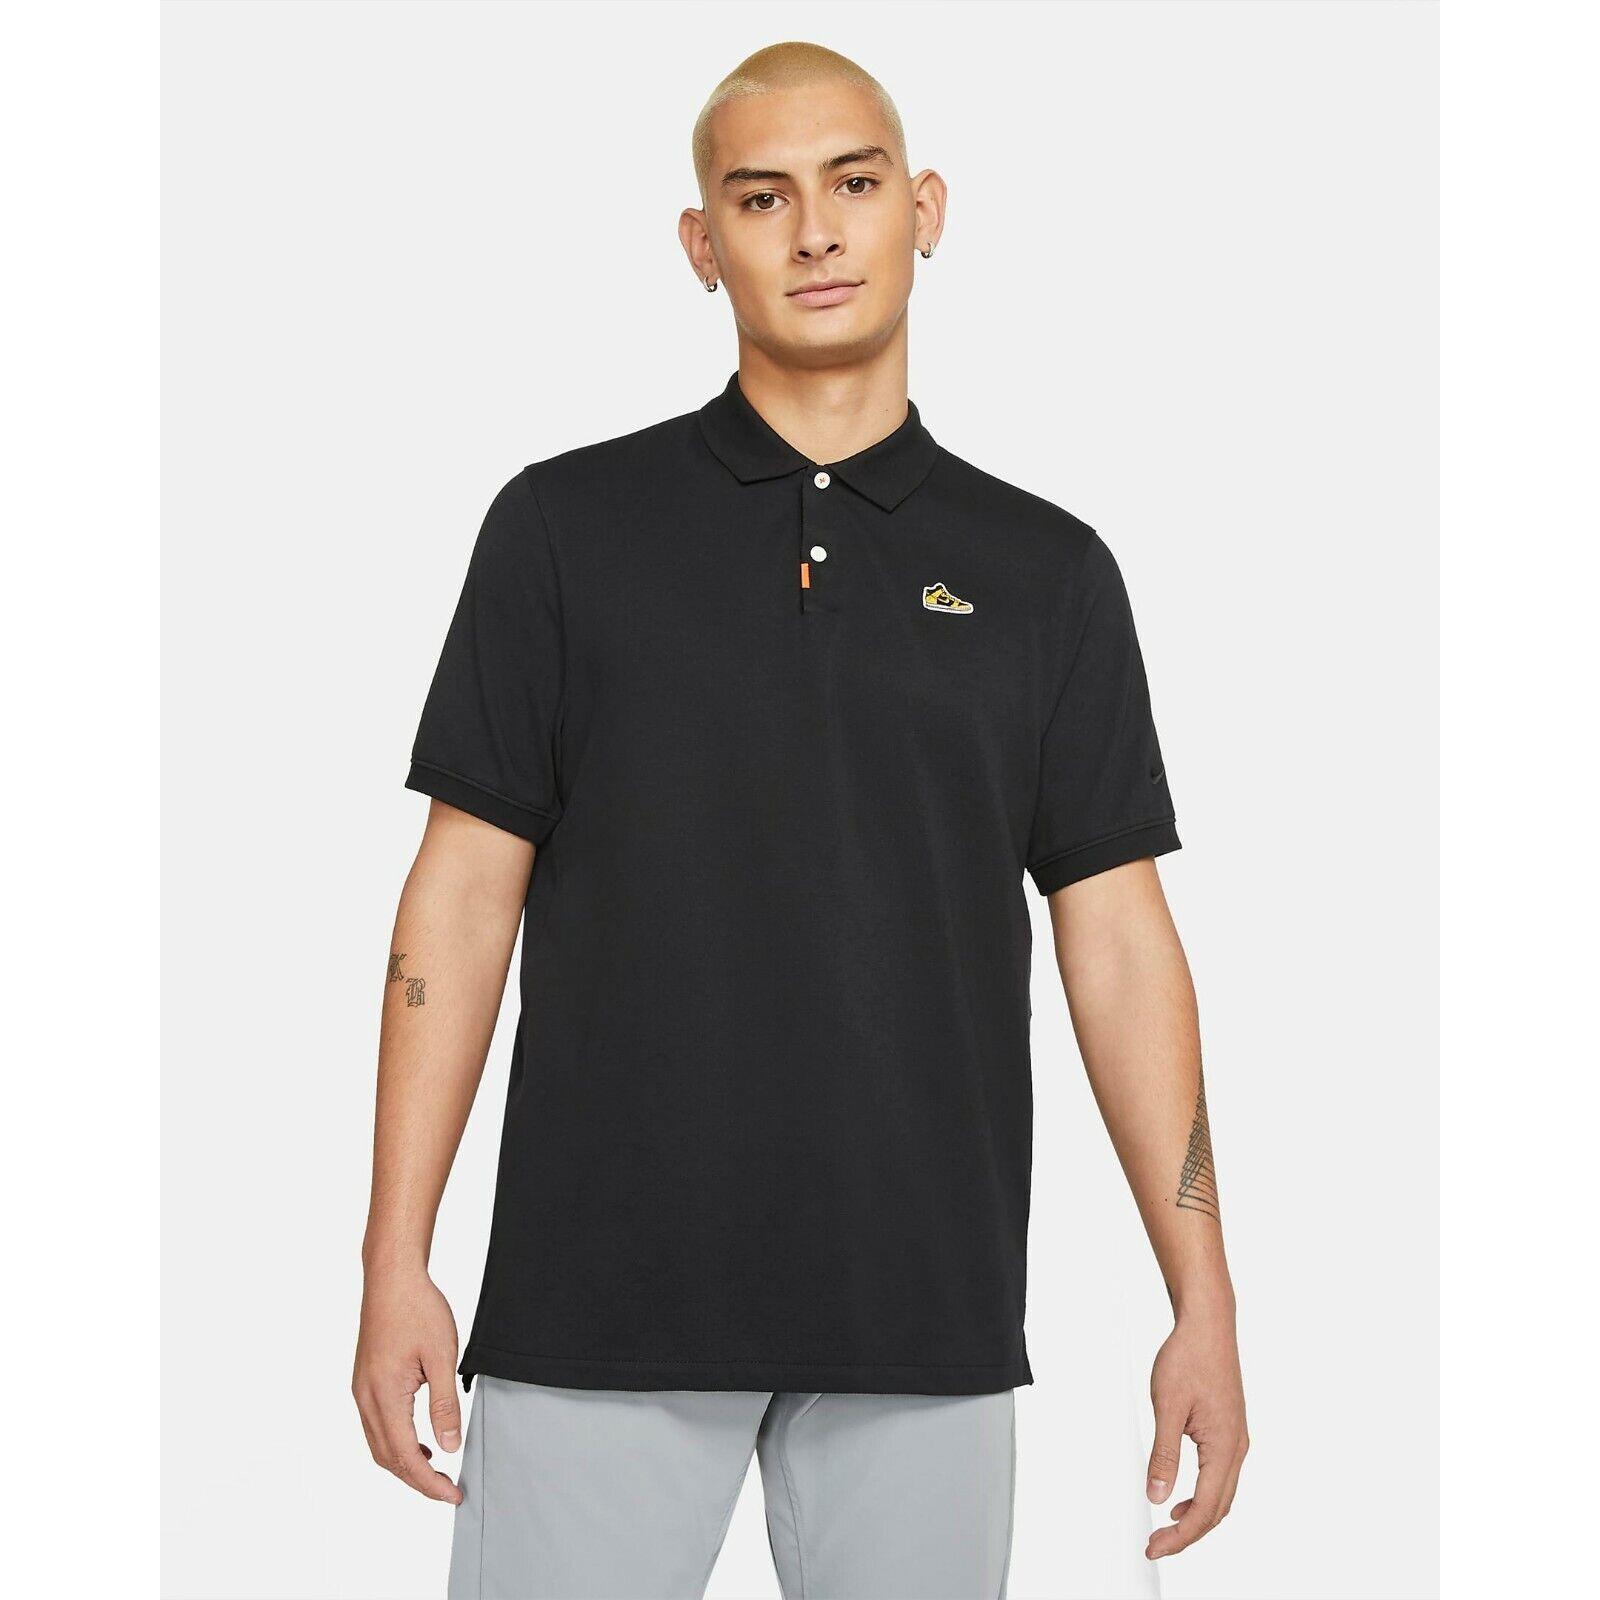 The Nike Polo Dri-fit Dunk High Varsity Maize S/s Polo Shirt Size M Black Yellow